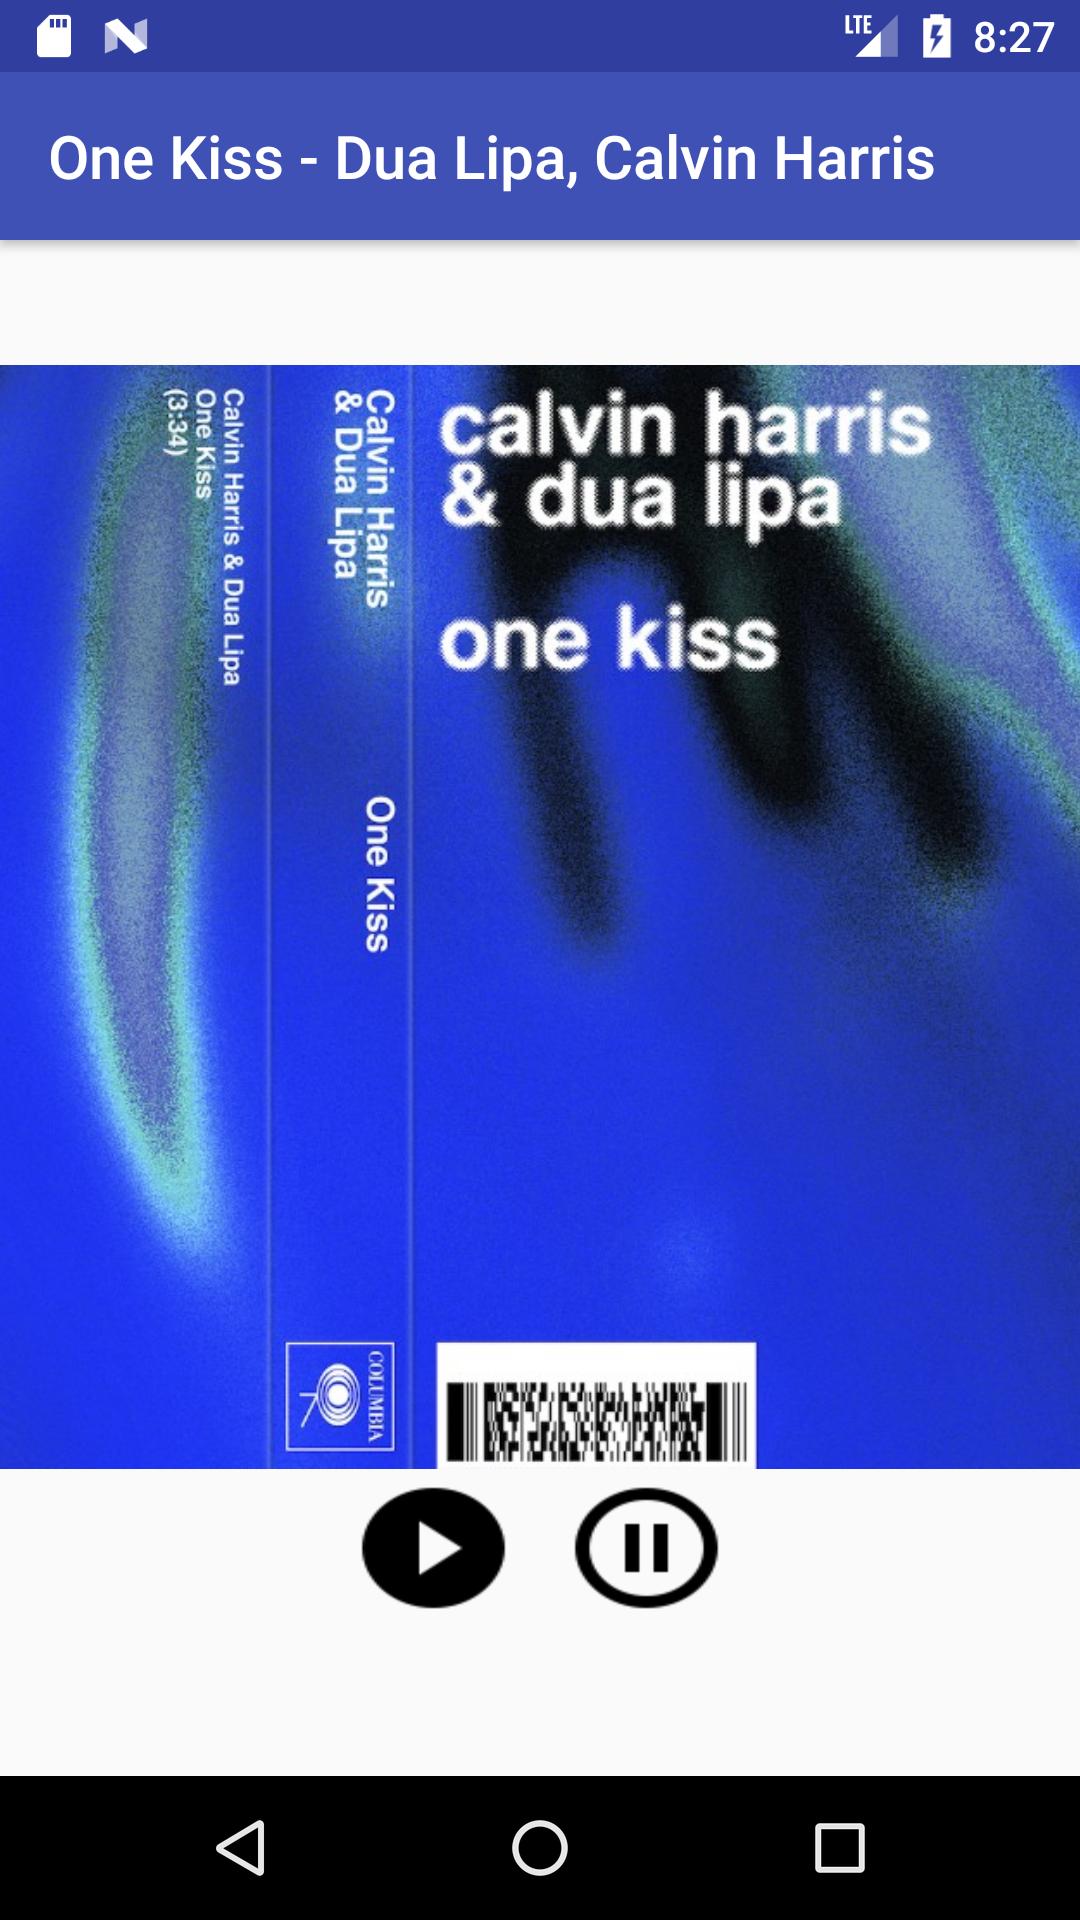 One Kiss - Dua Lipa, Calvin Harris for Android - APK Download